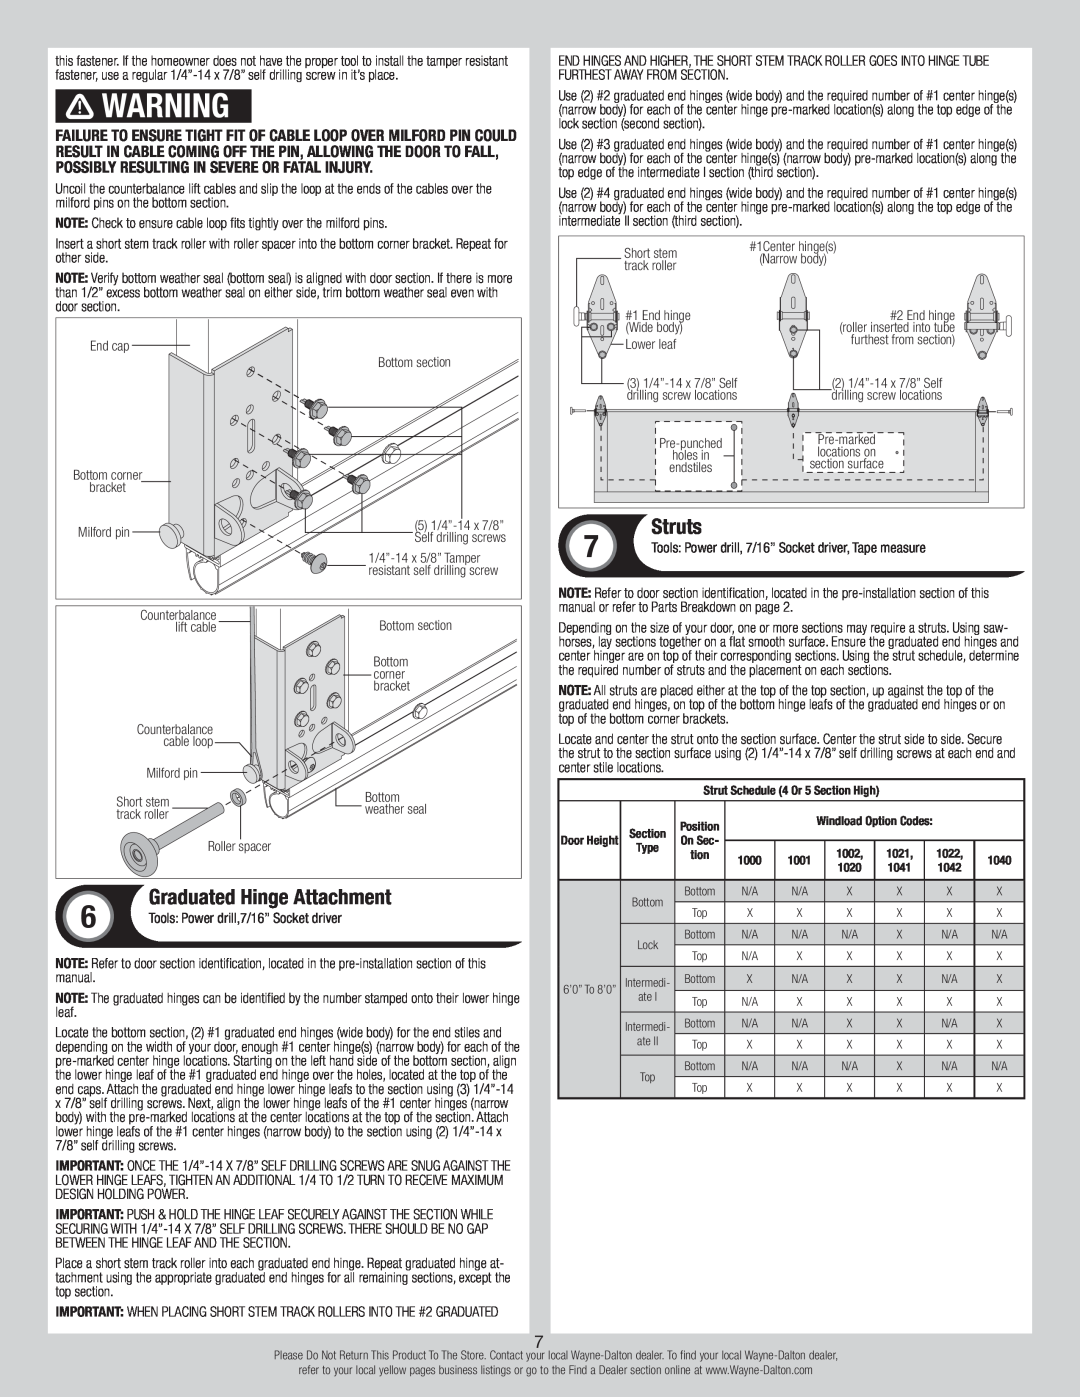 Wayne-Dalton 8700 installation instructions Struts, Graduated Hinge Attachment 